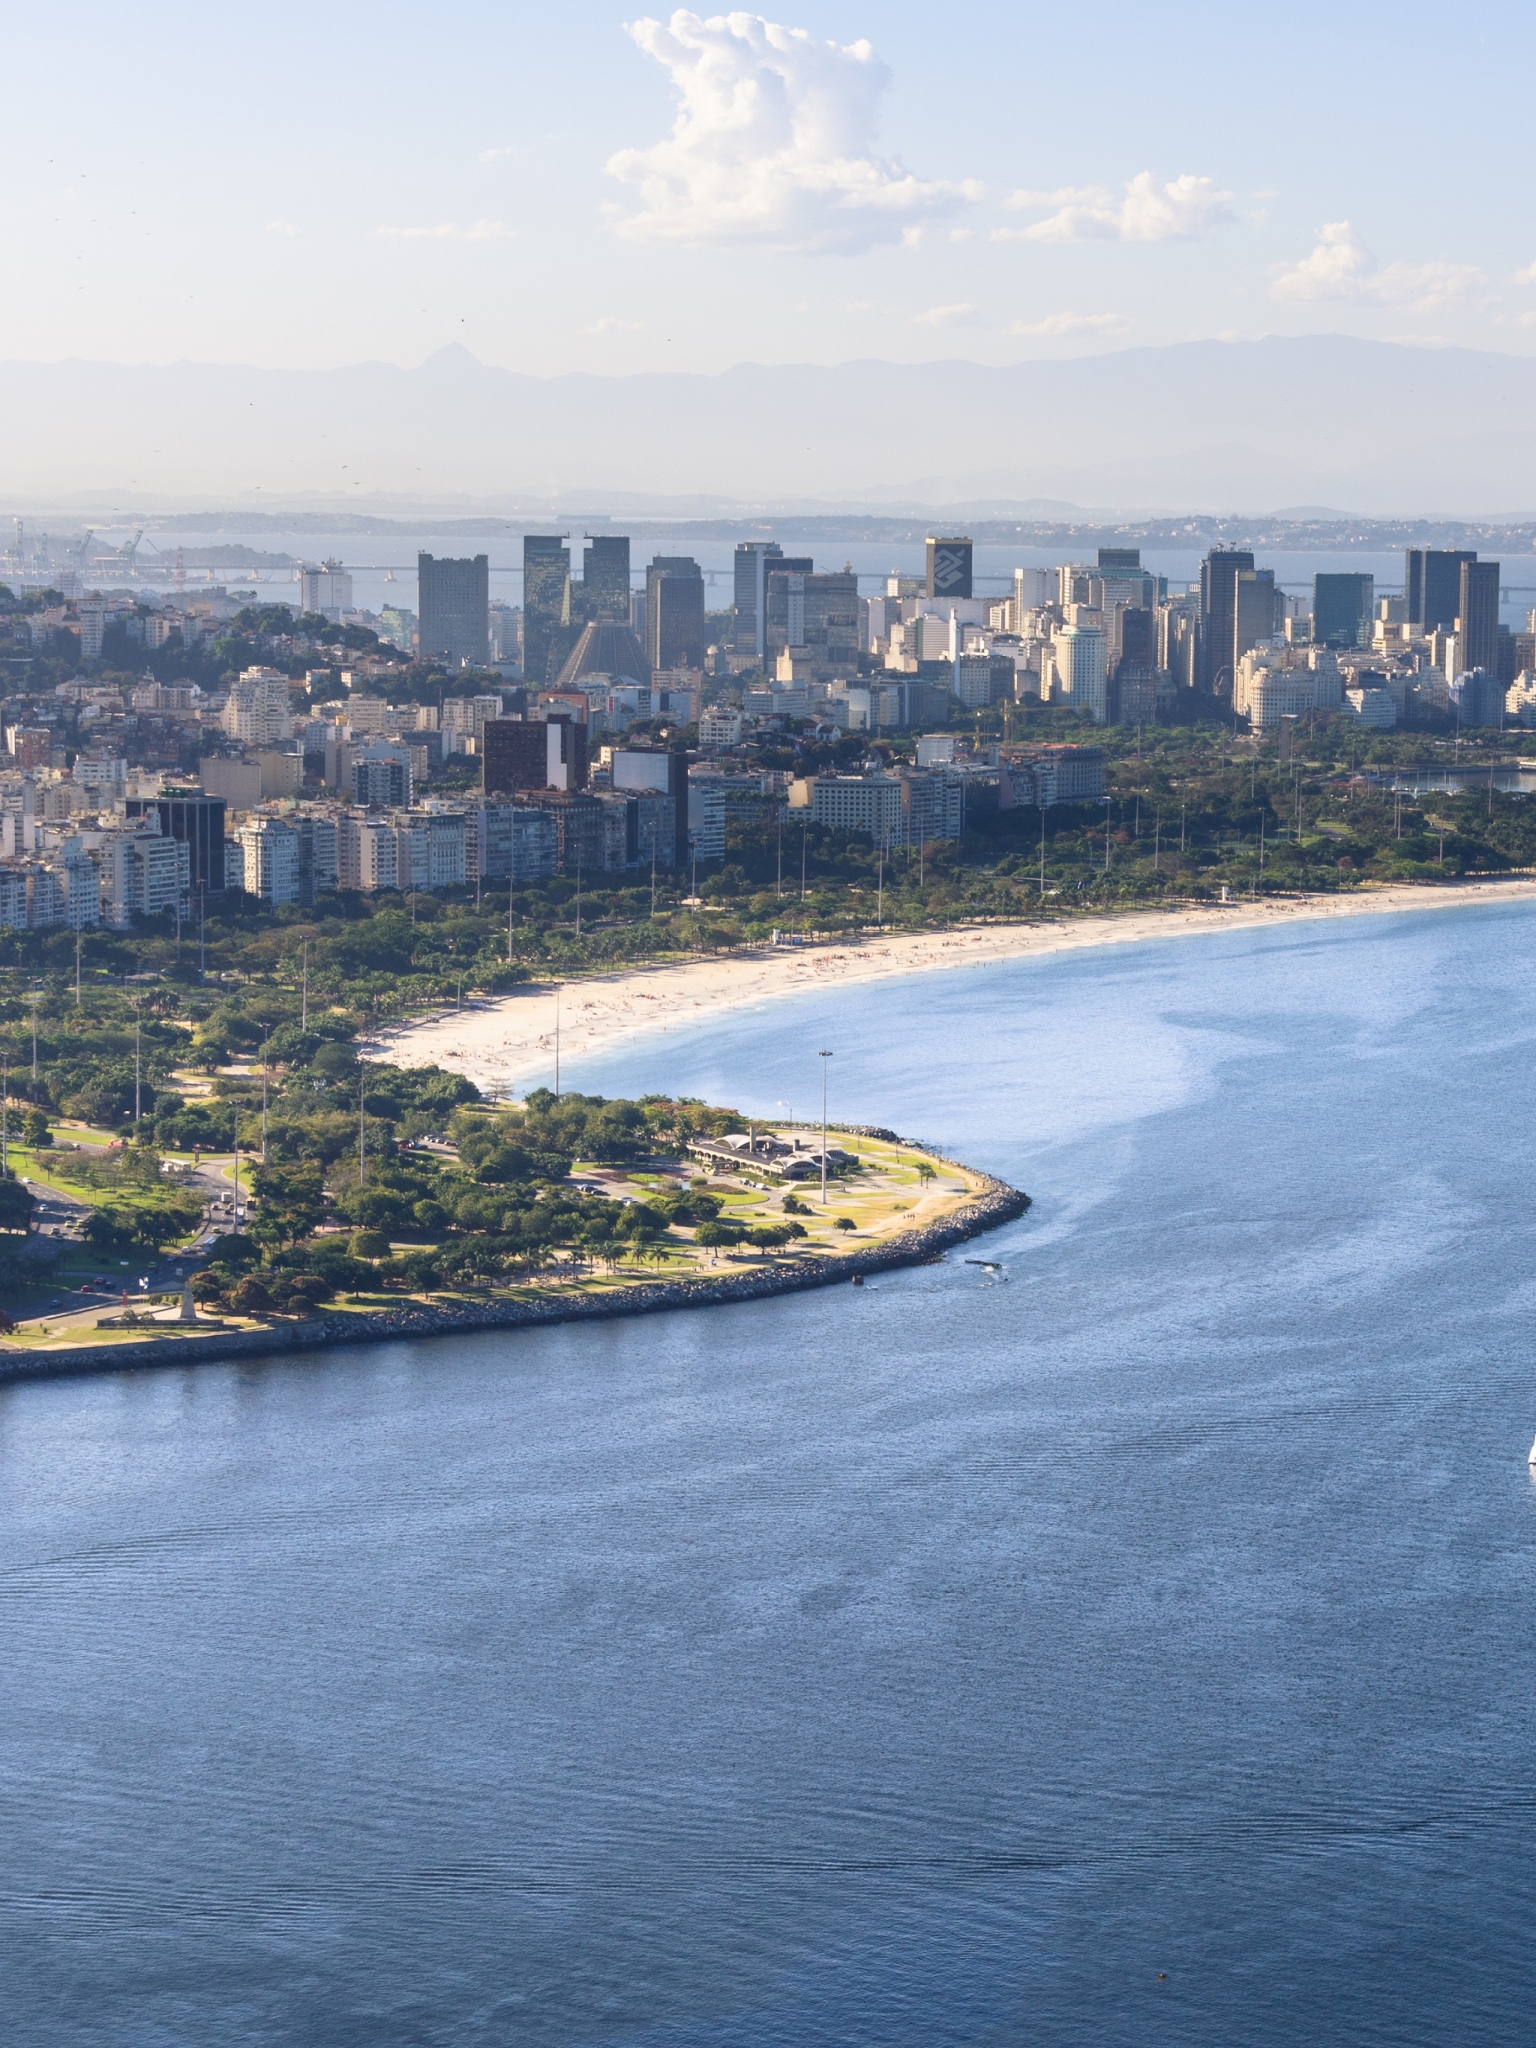 Rio de Janeiro Brazil for Apple iPad Air 2 resolution